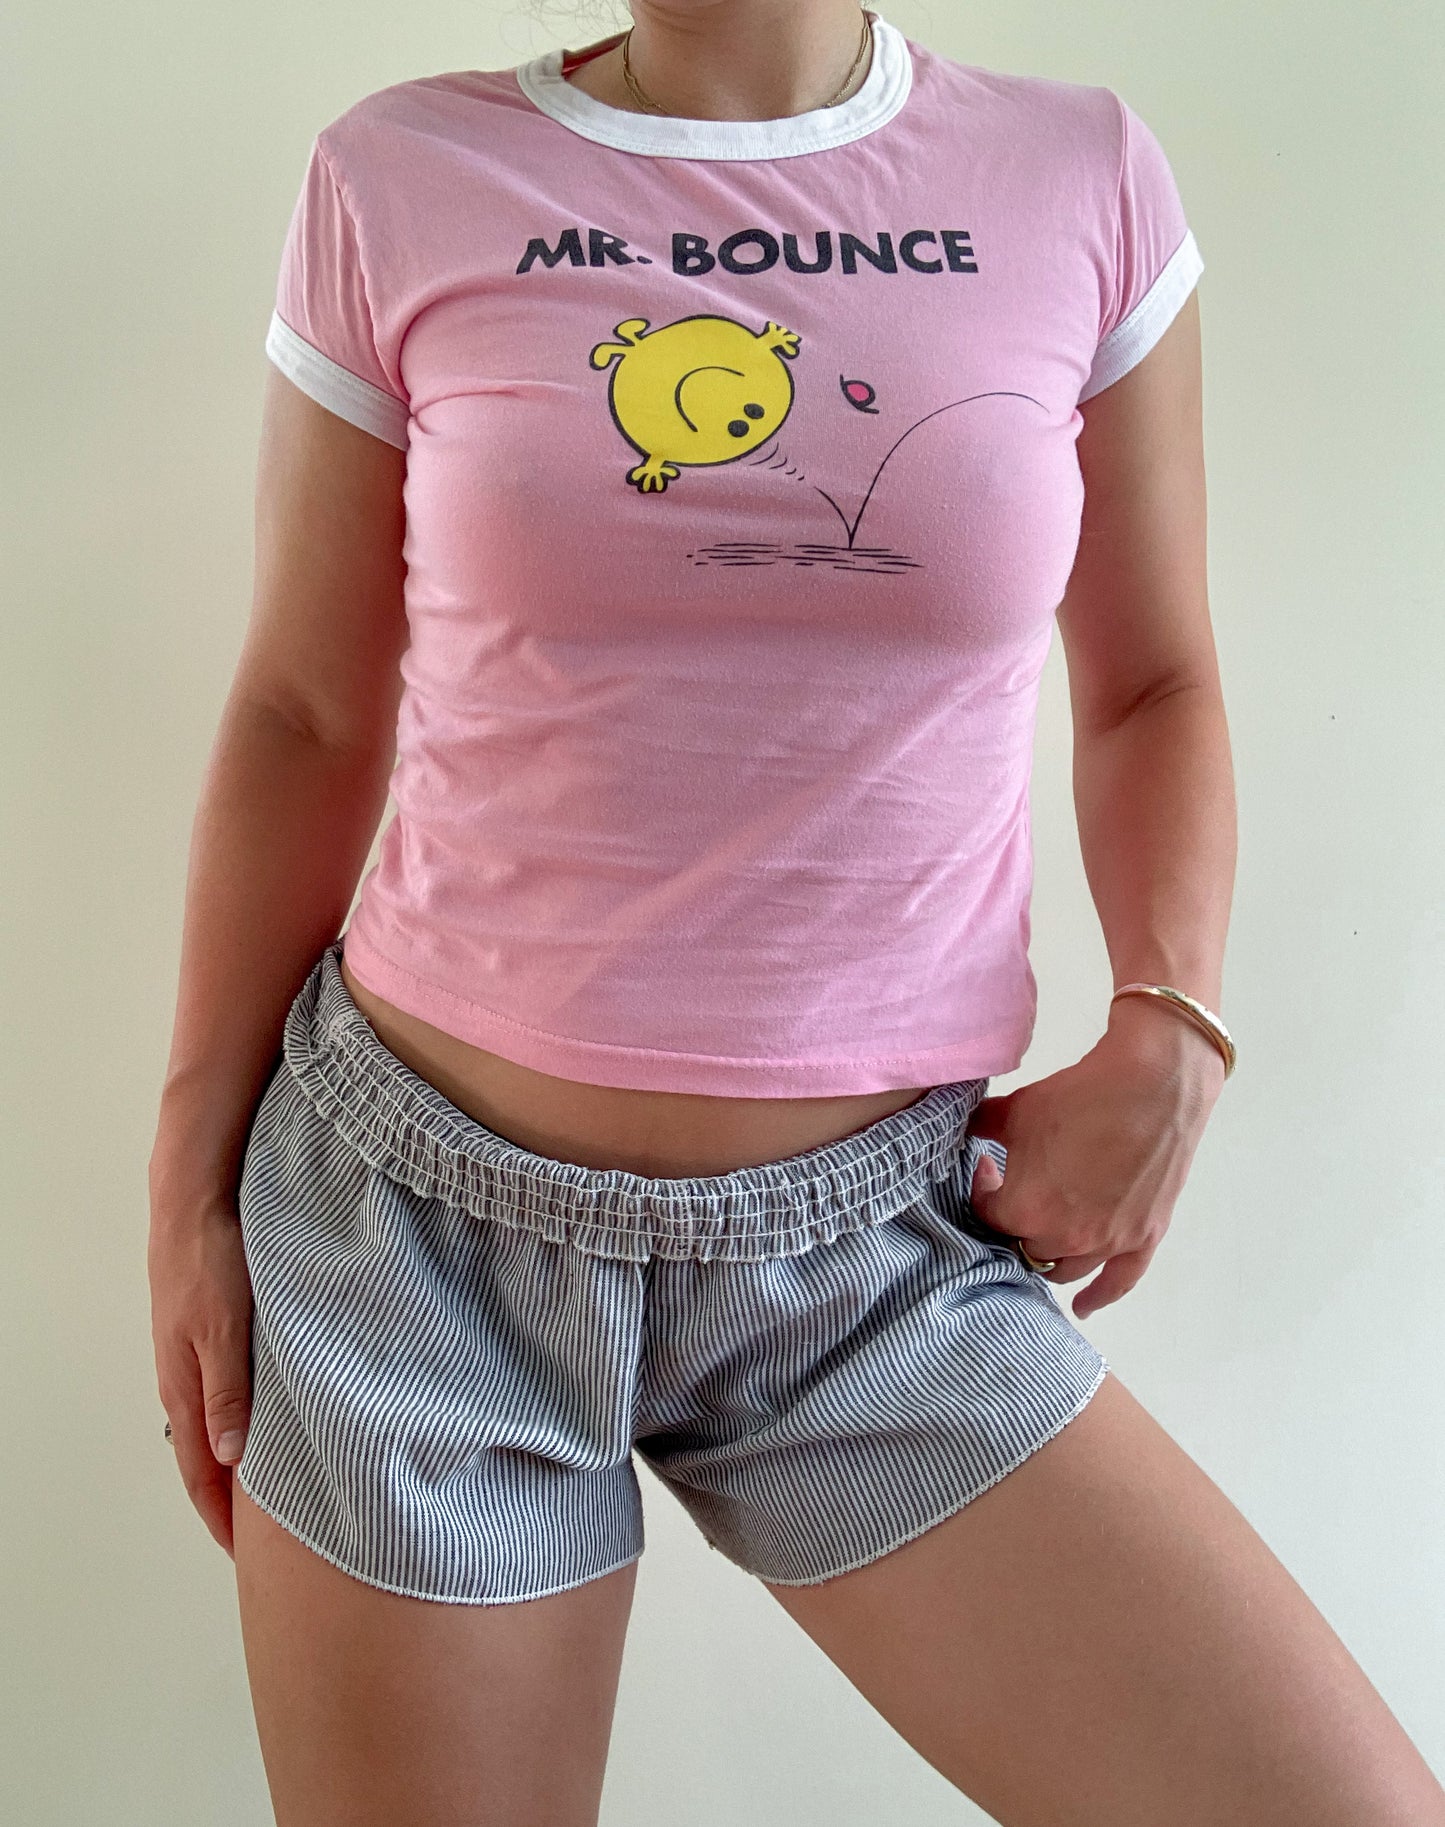 Mr. Bounce Baby Tee